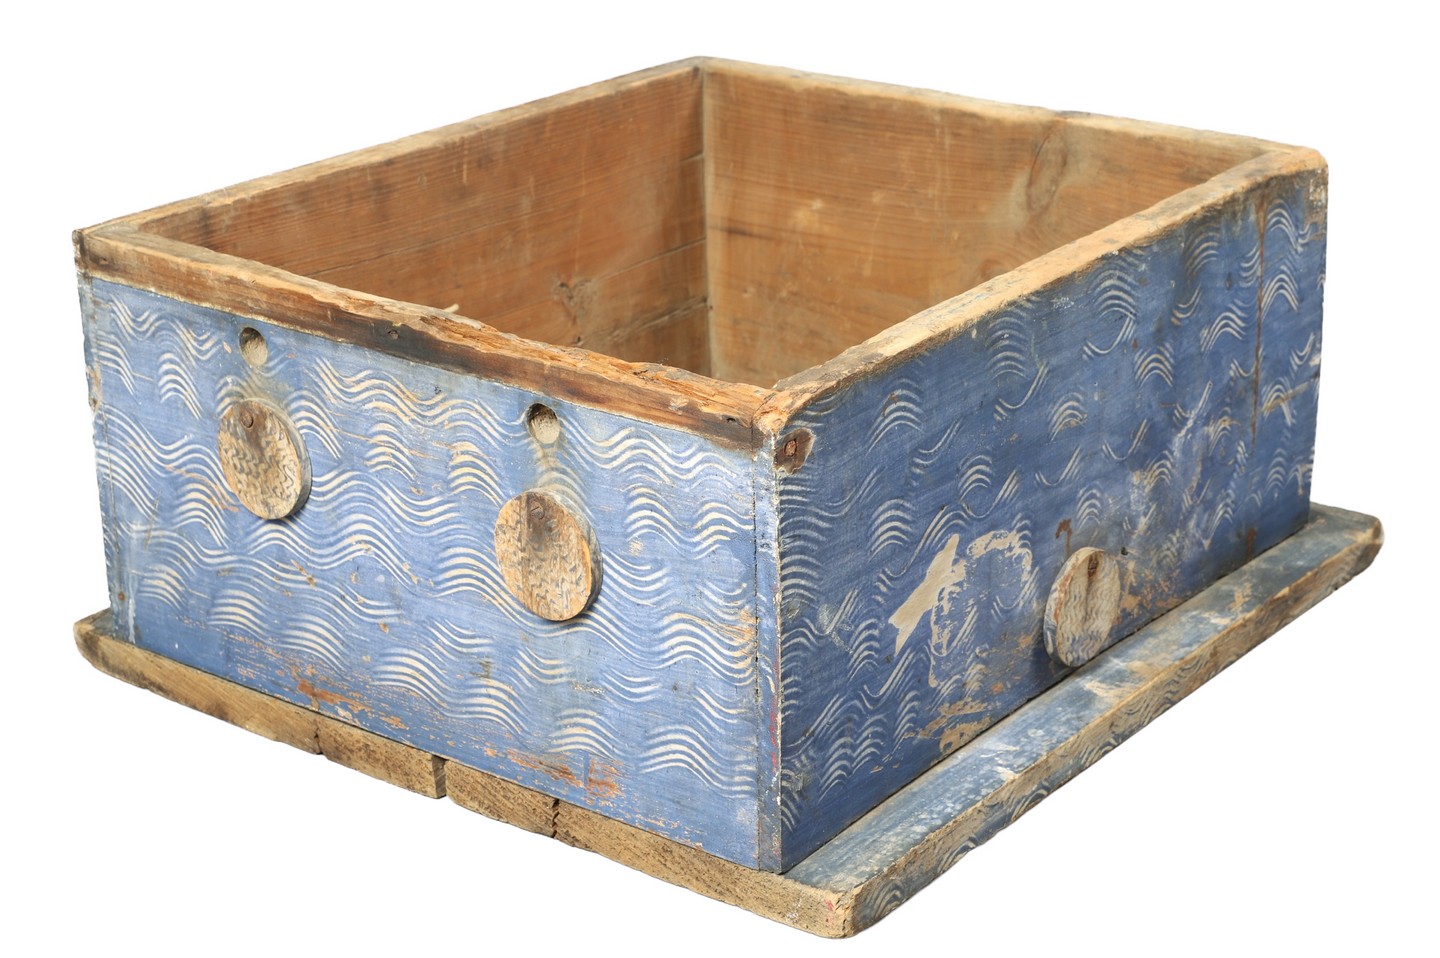 Wood bee box, remnants of sgraffito